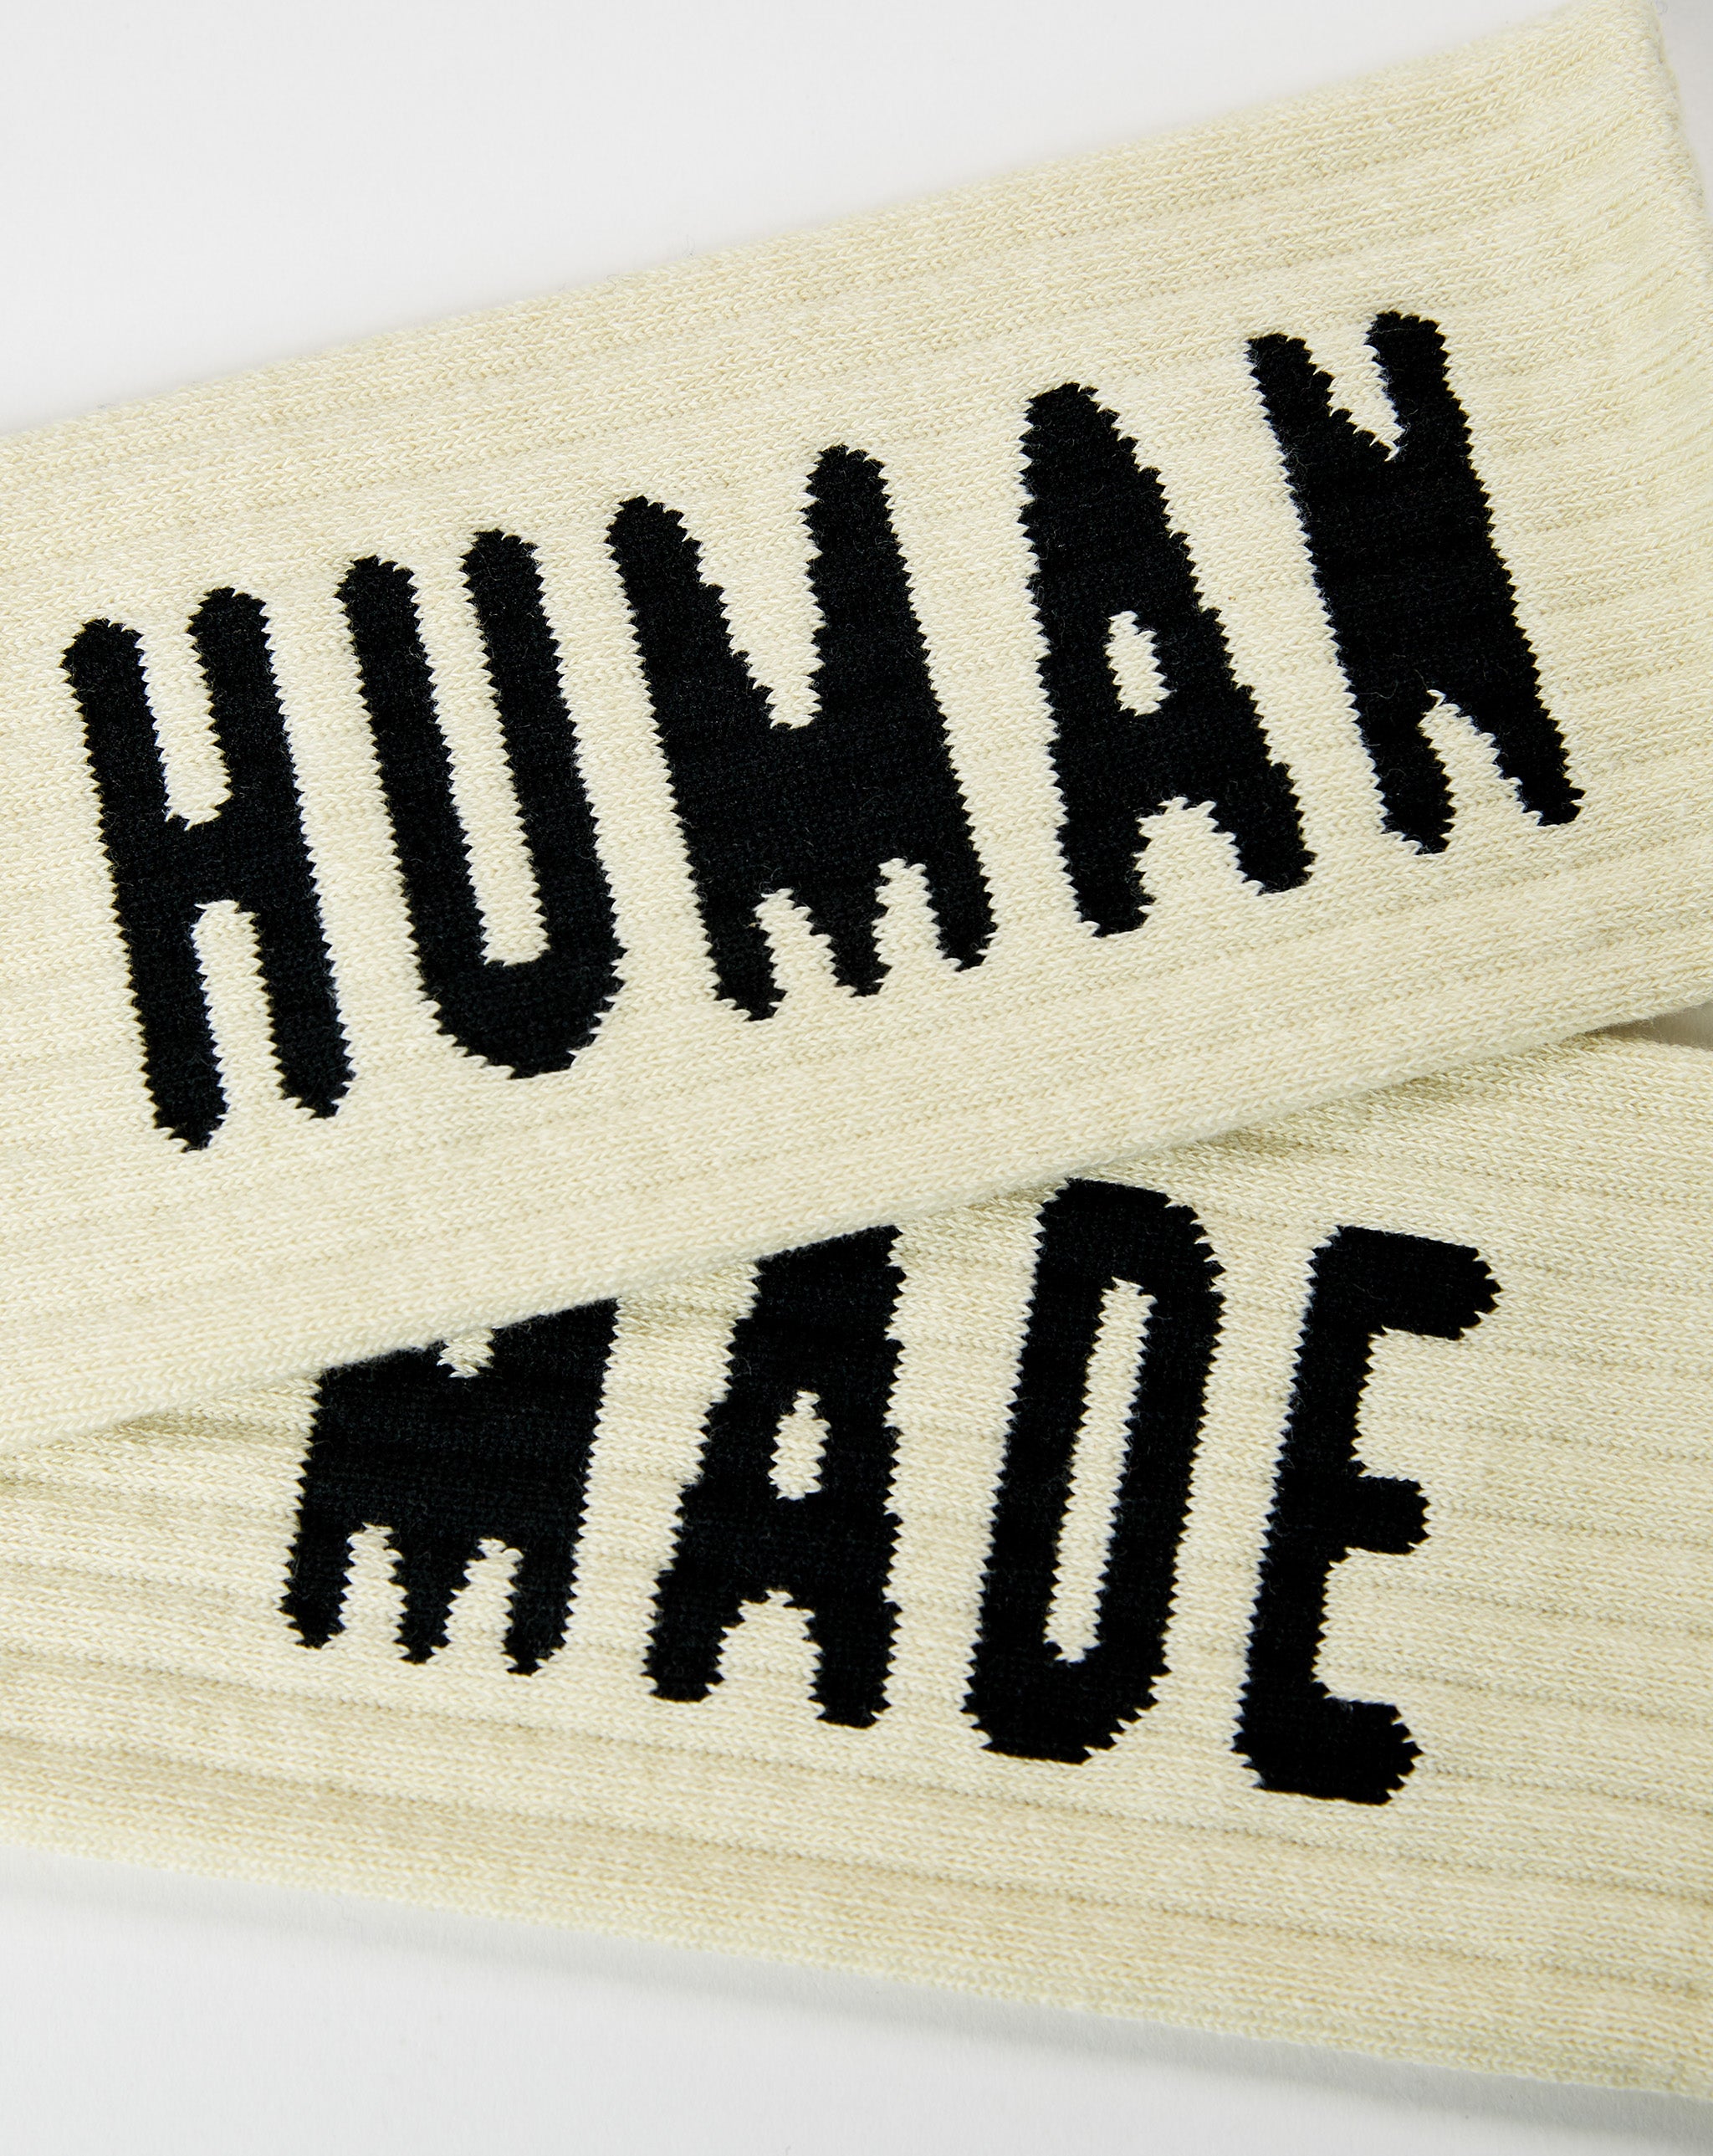 Human Made Hm Logo Socks  - Cheap 127-0 Jordan outlet